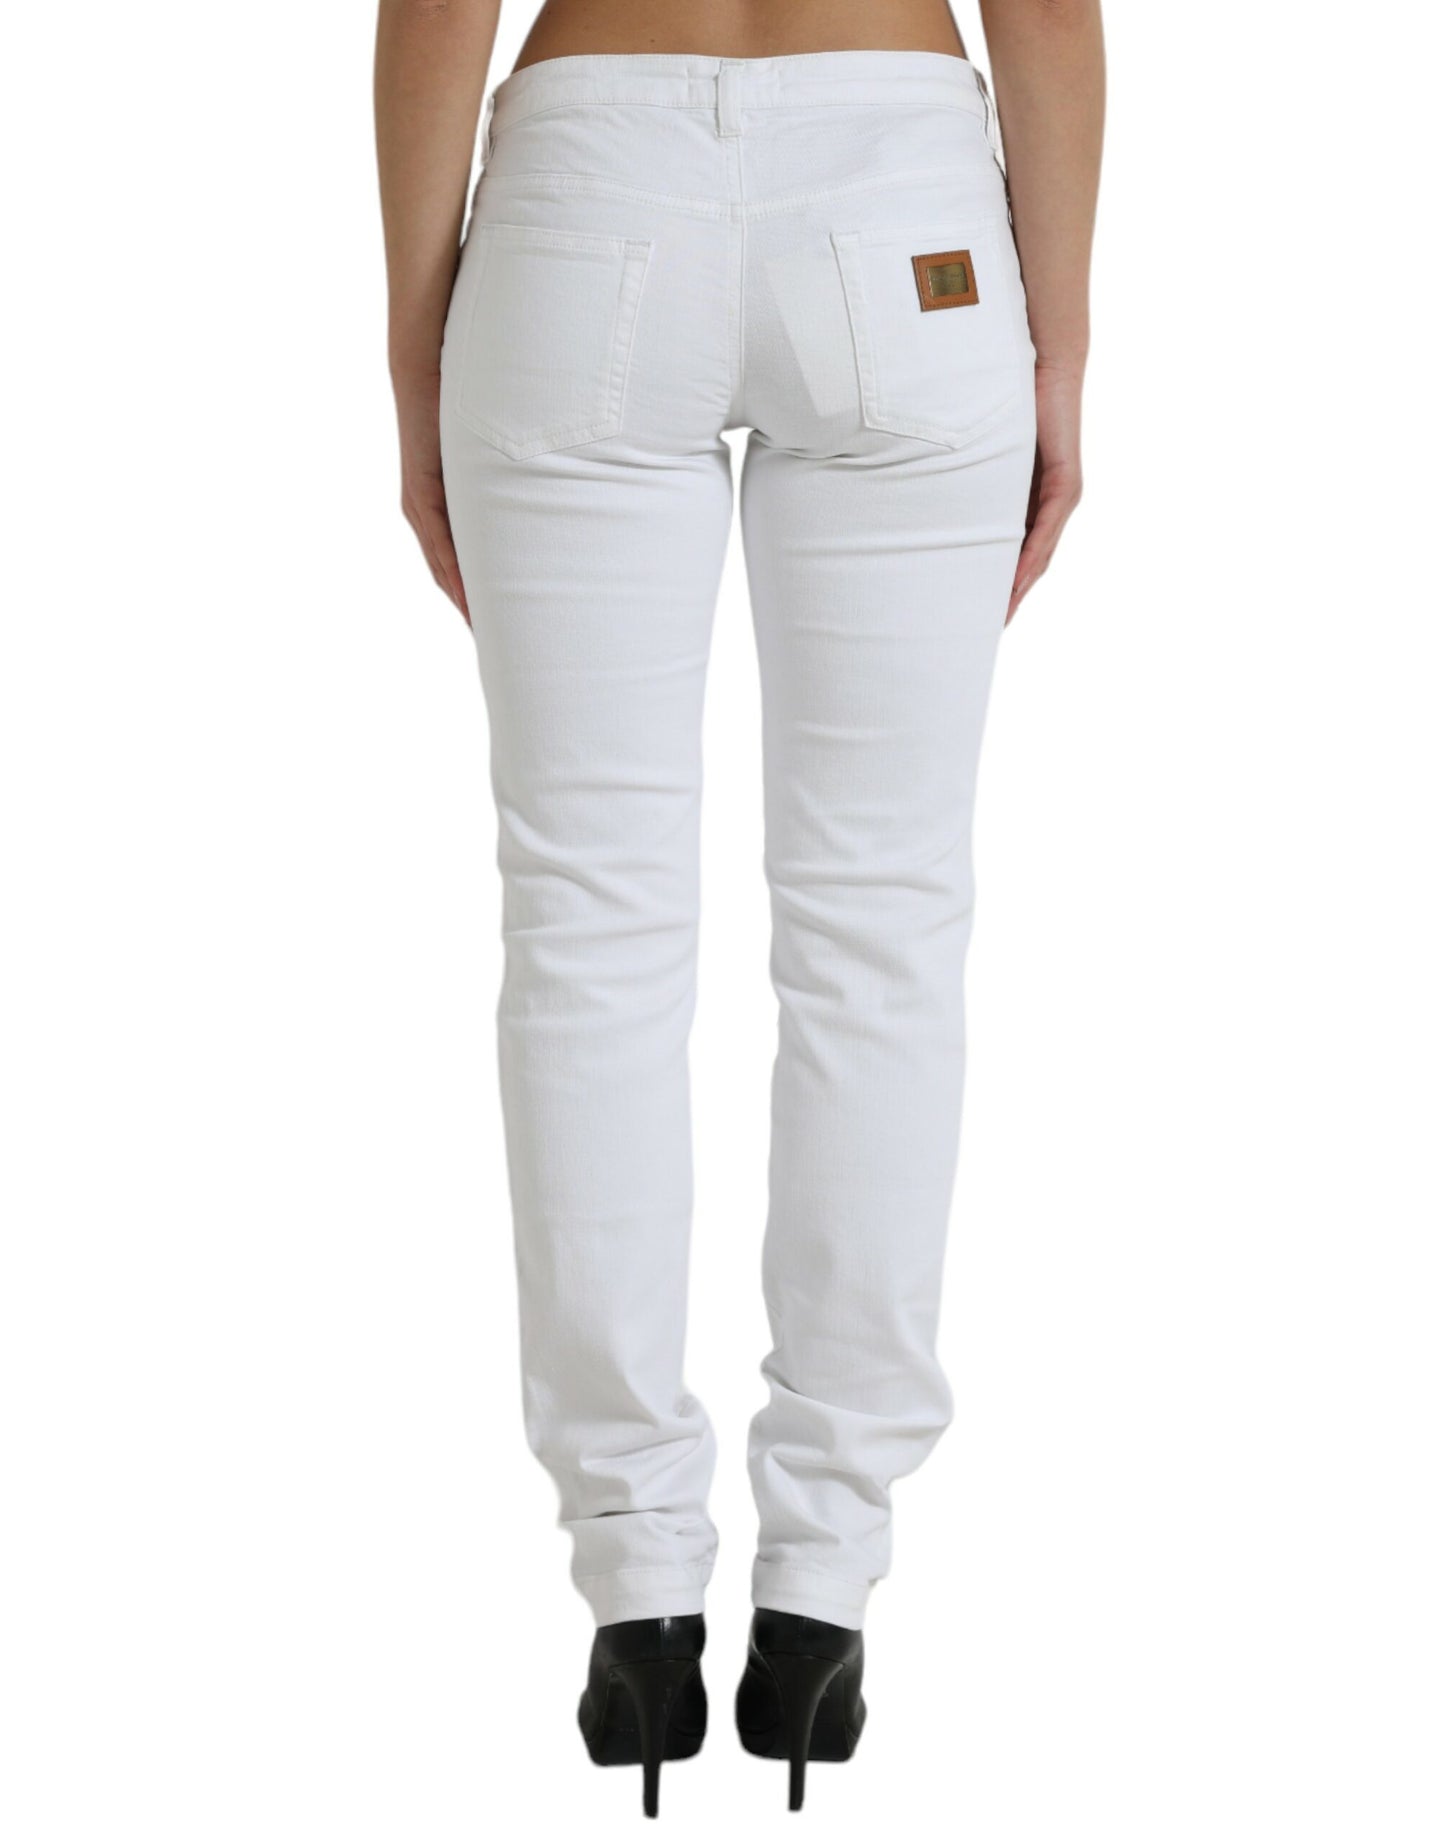 Chic White Stretch Denim Jeans